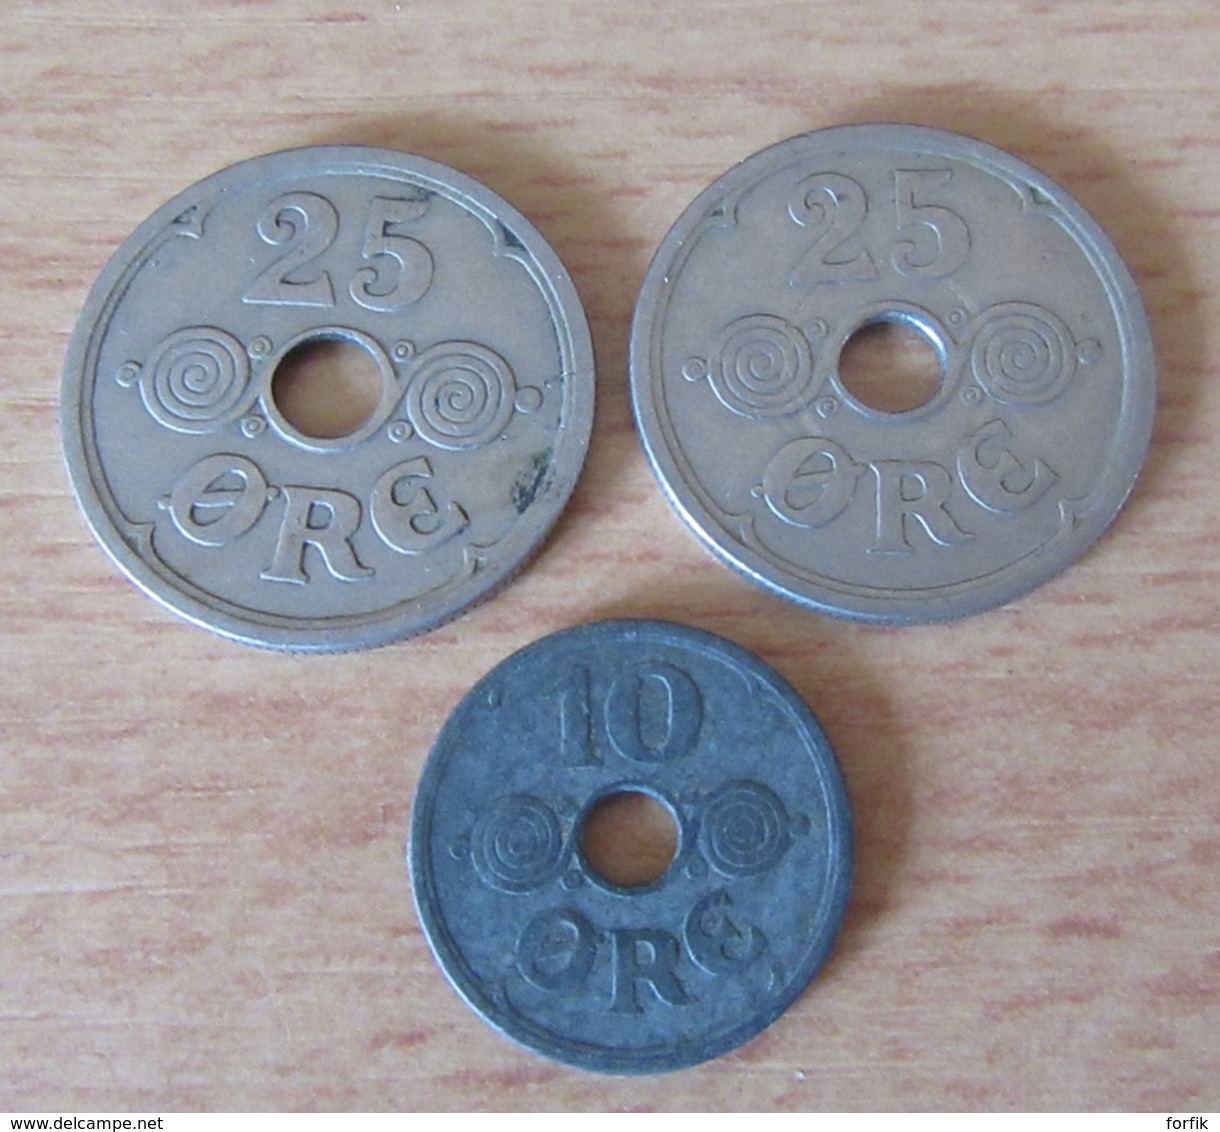 Danemark / Danmark - Lot De 3 Monnaies Modernes Dont Rare 25 Ore 1935 + 1936 + 10 Ore 1941 - TTB / SUP - Danemark